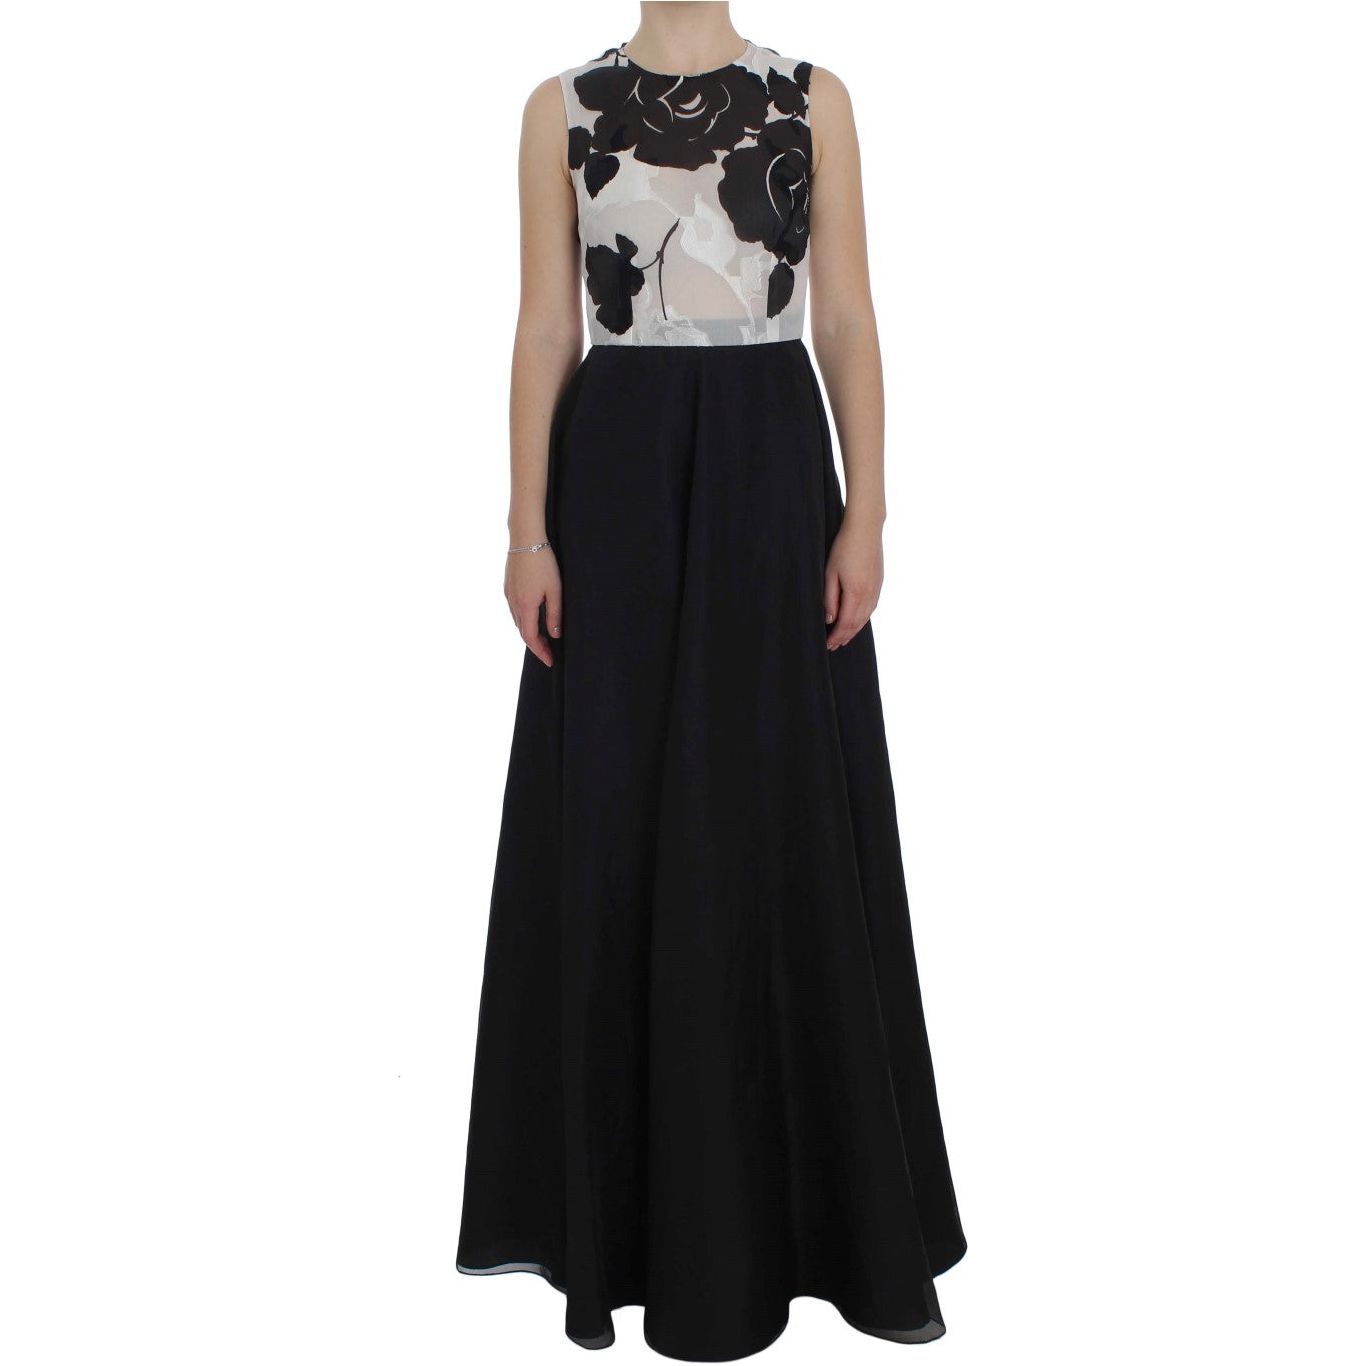 Dolce & Gabbana Elegant Floral Silk Full Length Dress black-white-floral-silk-sheath-gown-dress 72716-black-white-floral-silk-sheath-gown-dress.jpg